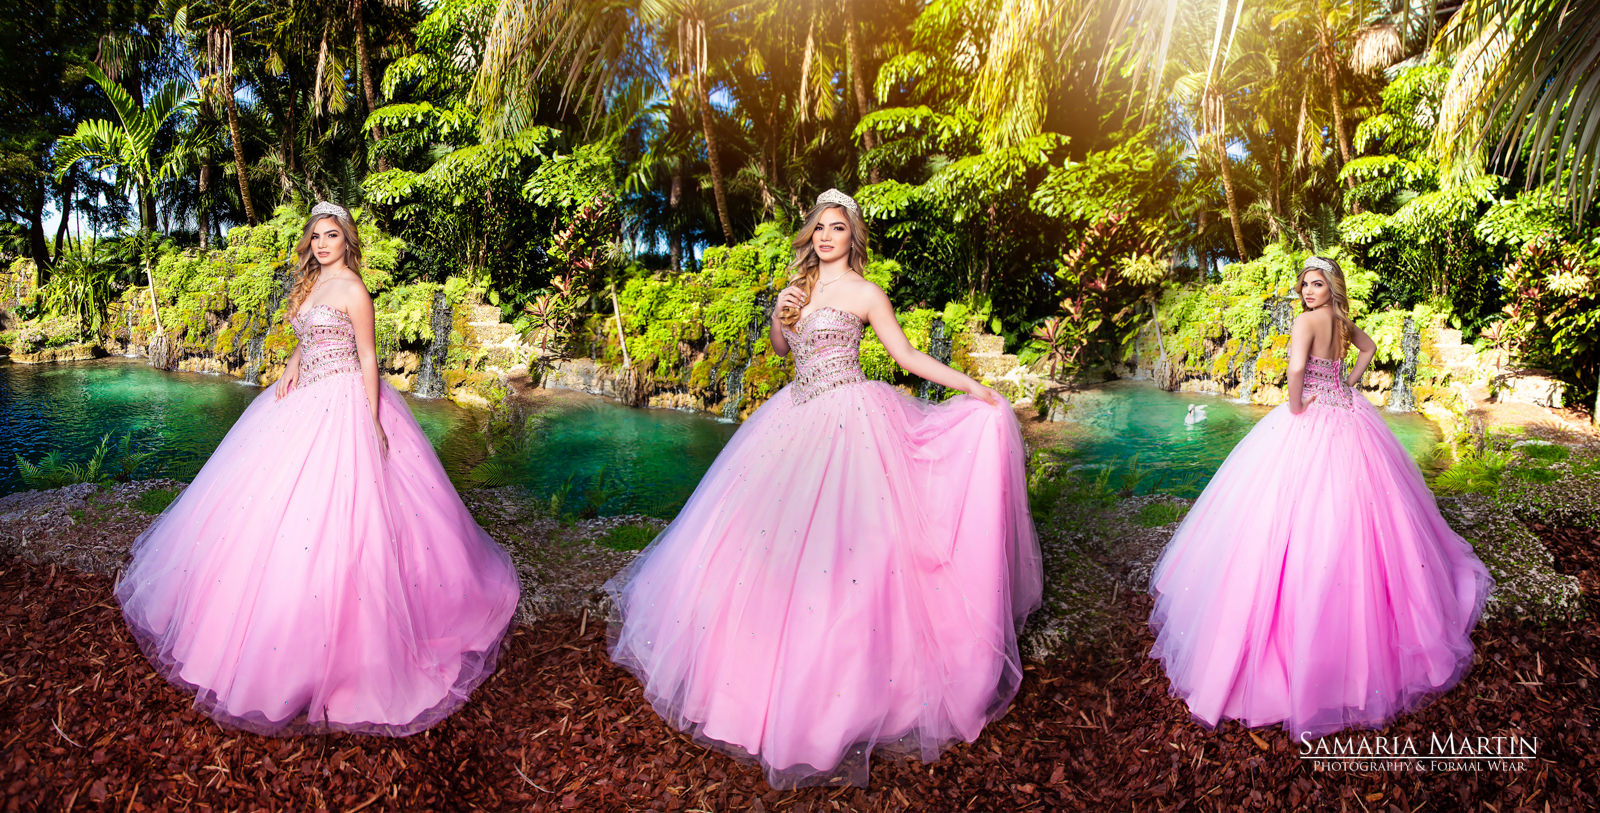 Miami Dress Rental, Morilee dresses, pink quinceanera dresses, quinceanera dresses near me, best Miami photographer 2